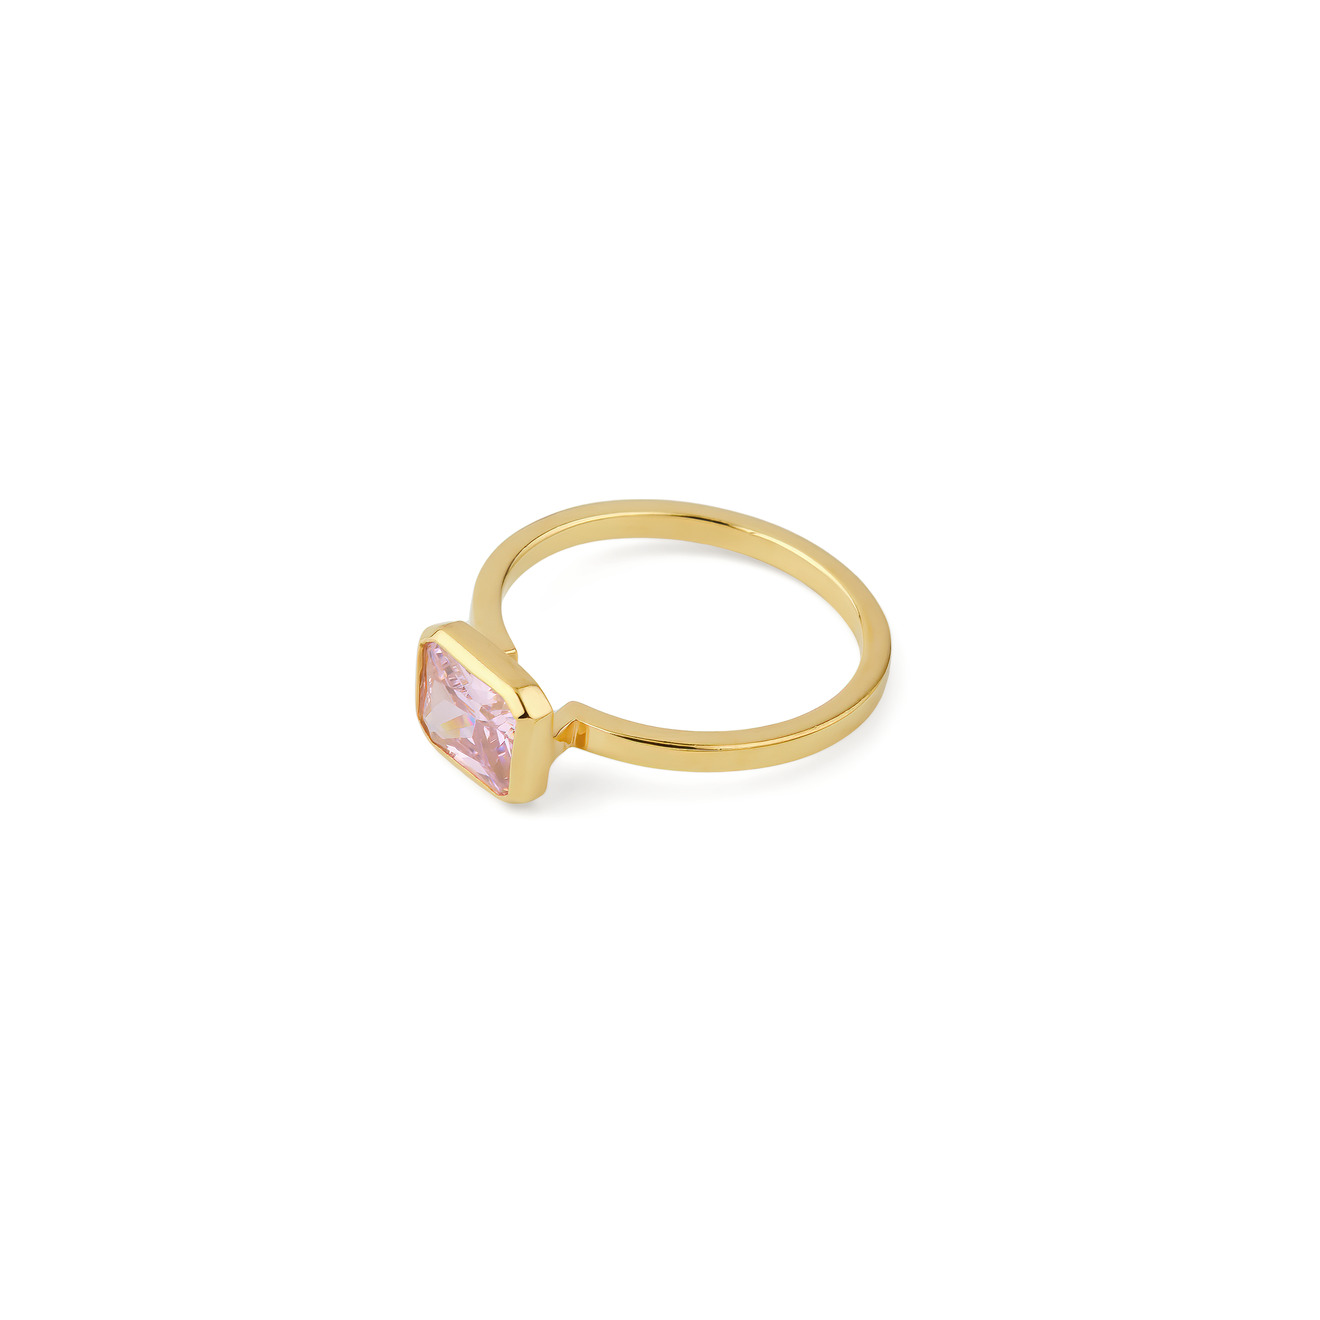 KRASHE jewellery Позолоченное кольцо Lollypop с розовым кристаллом позолоченное кольцо с розовым кварцем